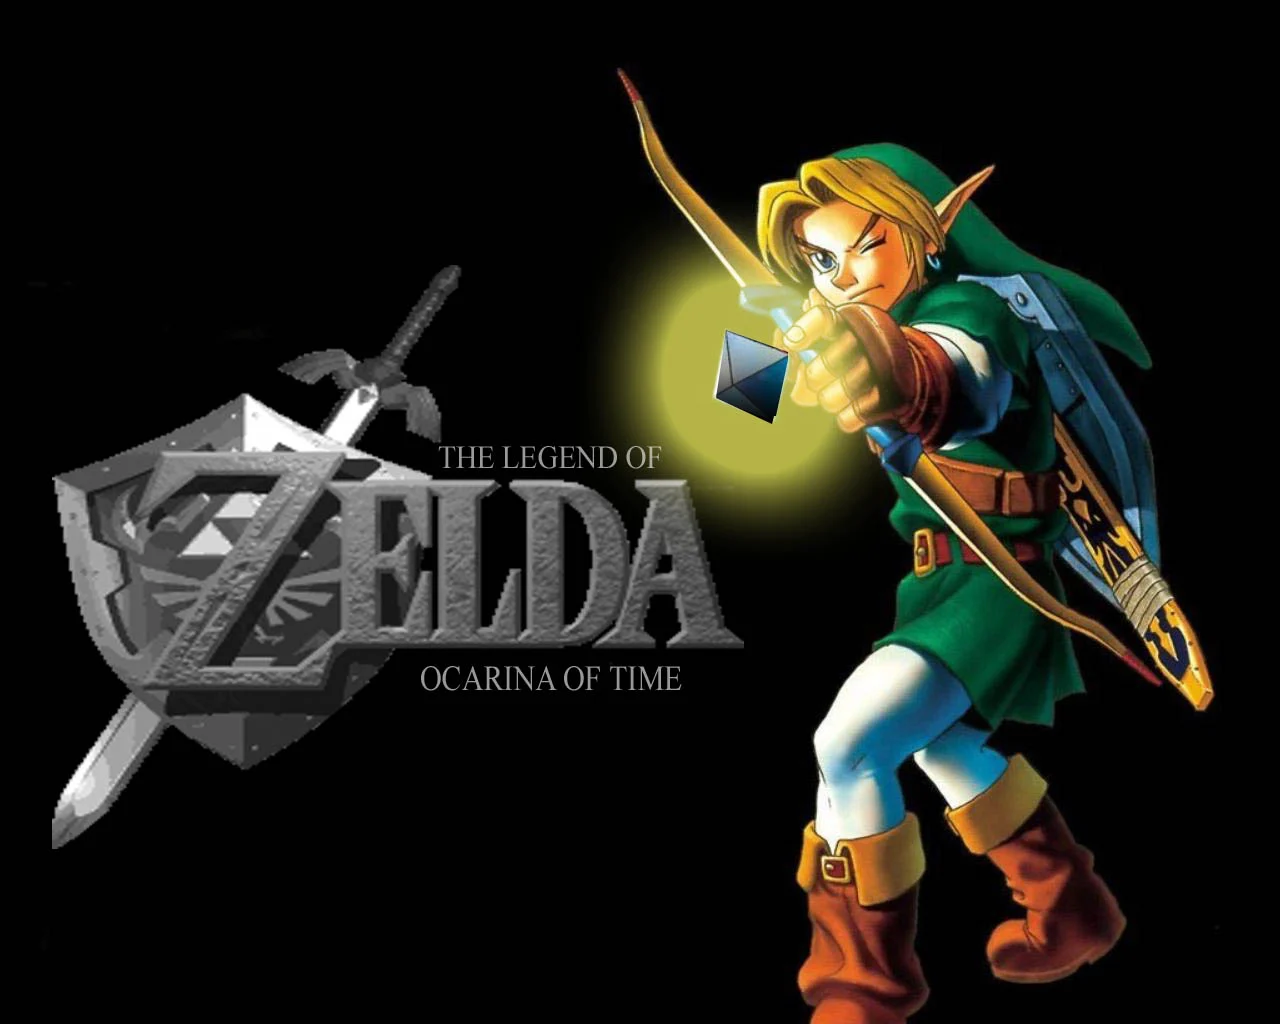 The Legend of Zelda - Ocarina of Time - capa 21-04 001